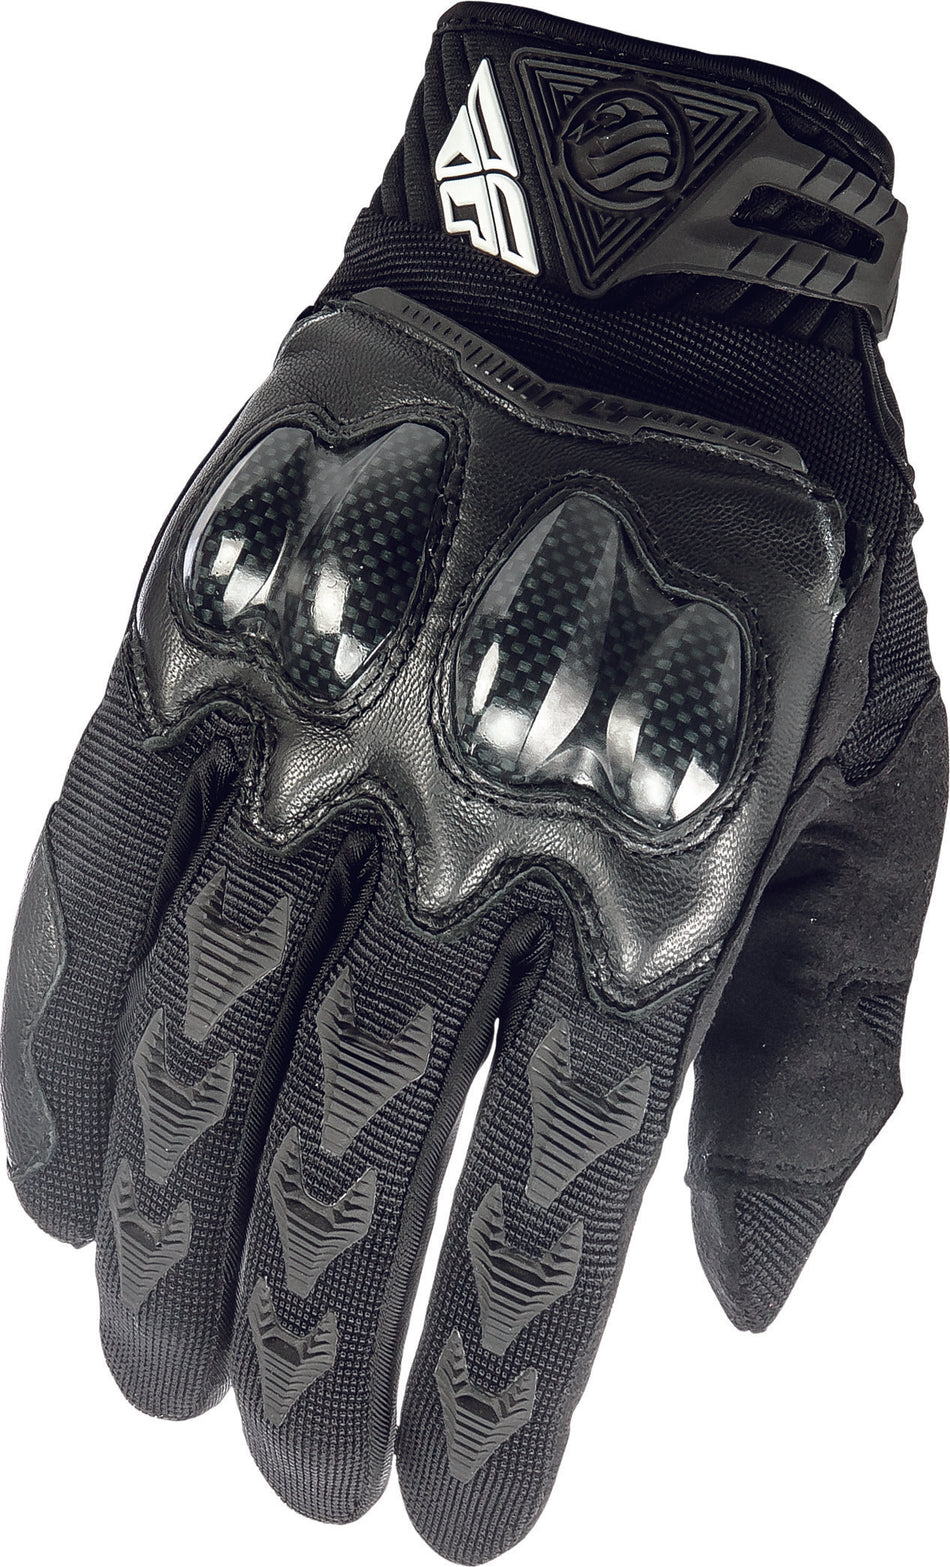 FLY RACING Patrol Xc Gloves Black Sz 13 369-06013